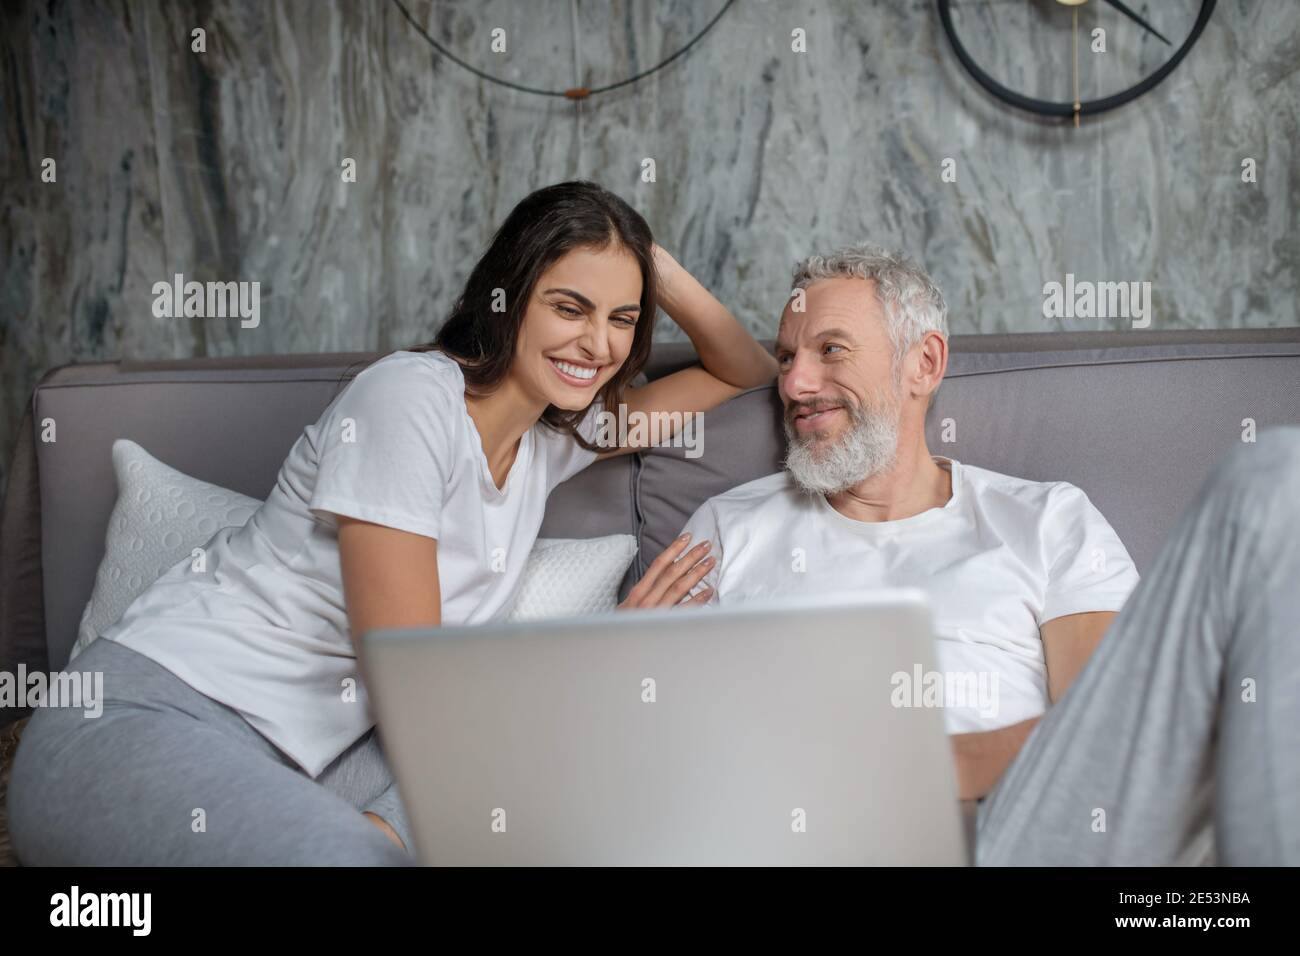 Cheerful sociable husband and wife at computer Stock Photo